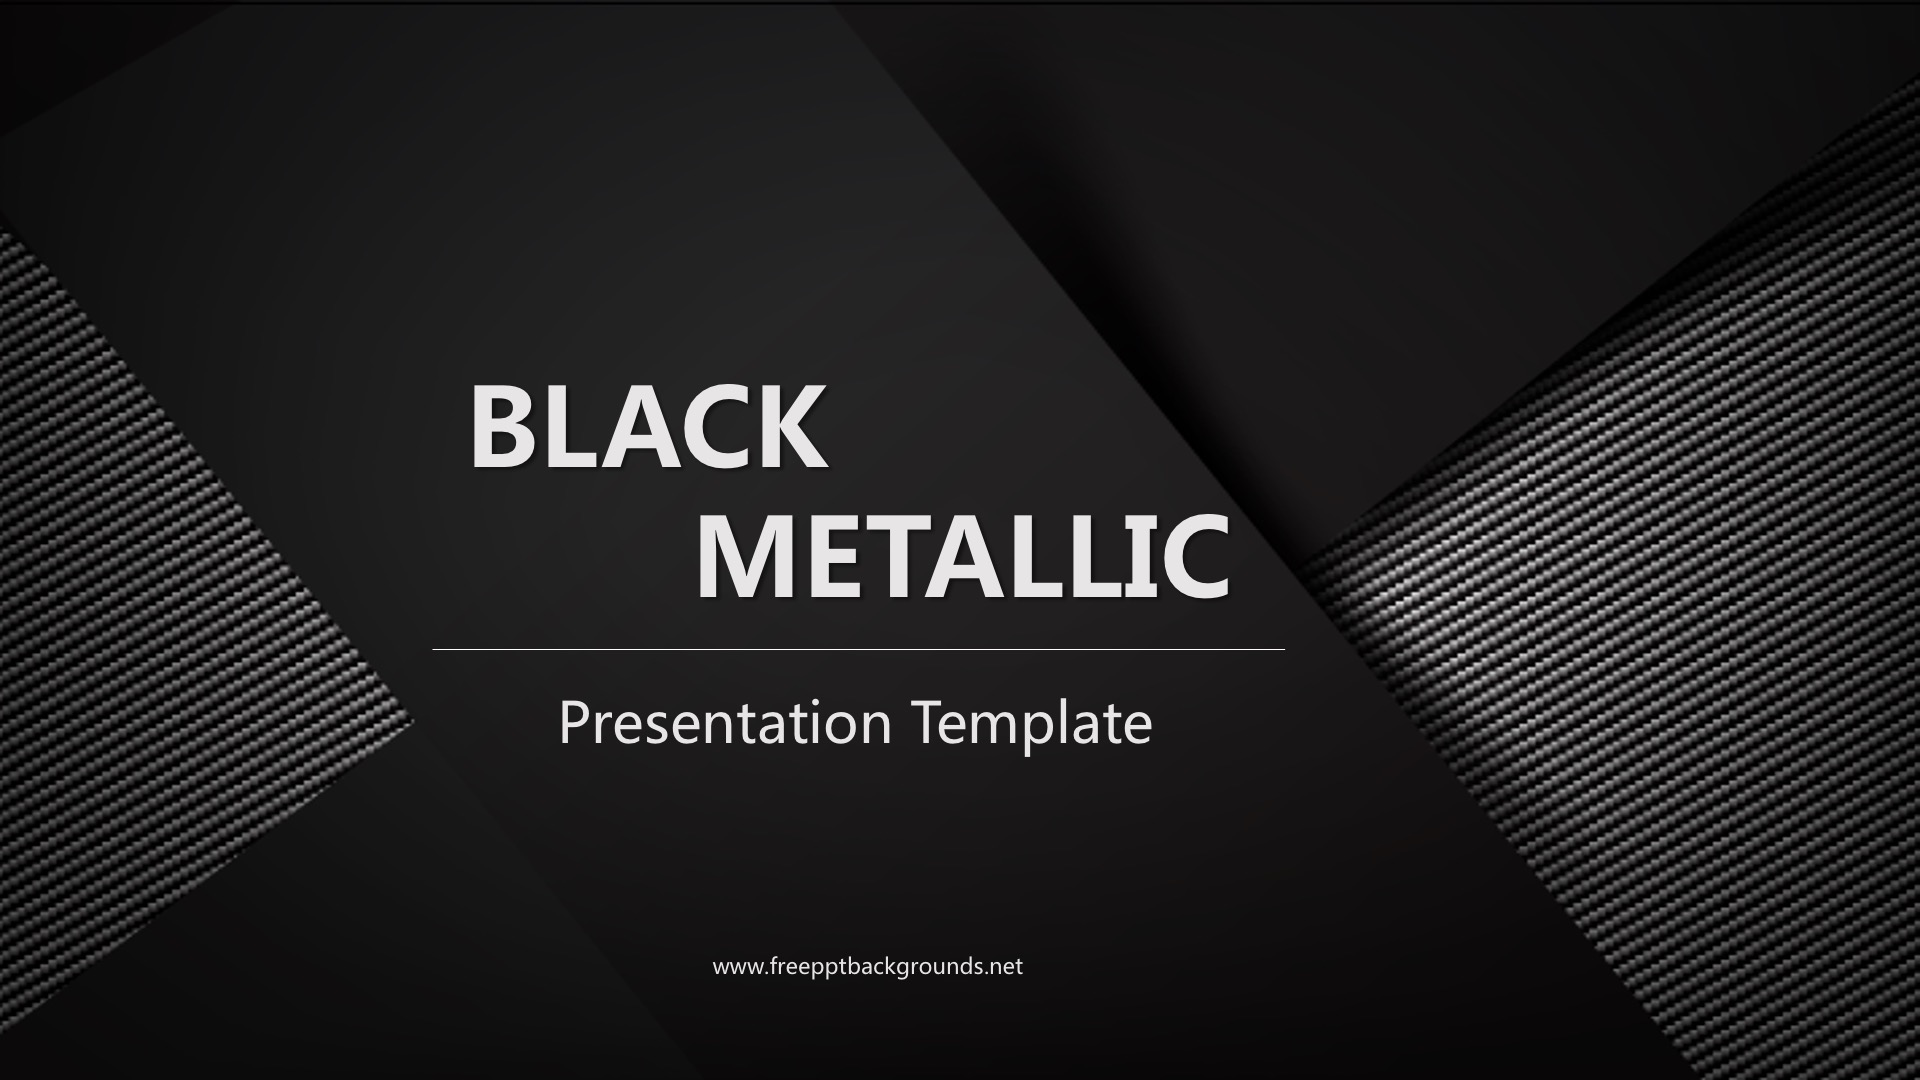 Black And White Presentation Template